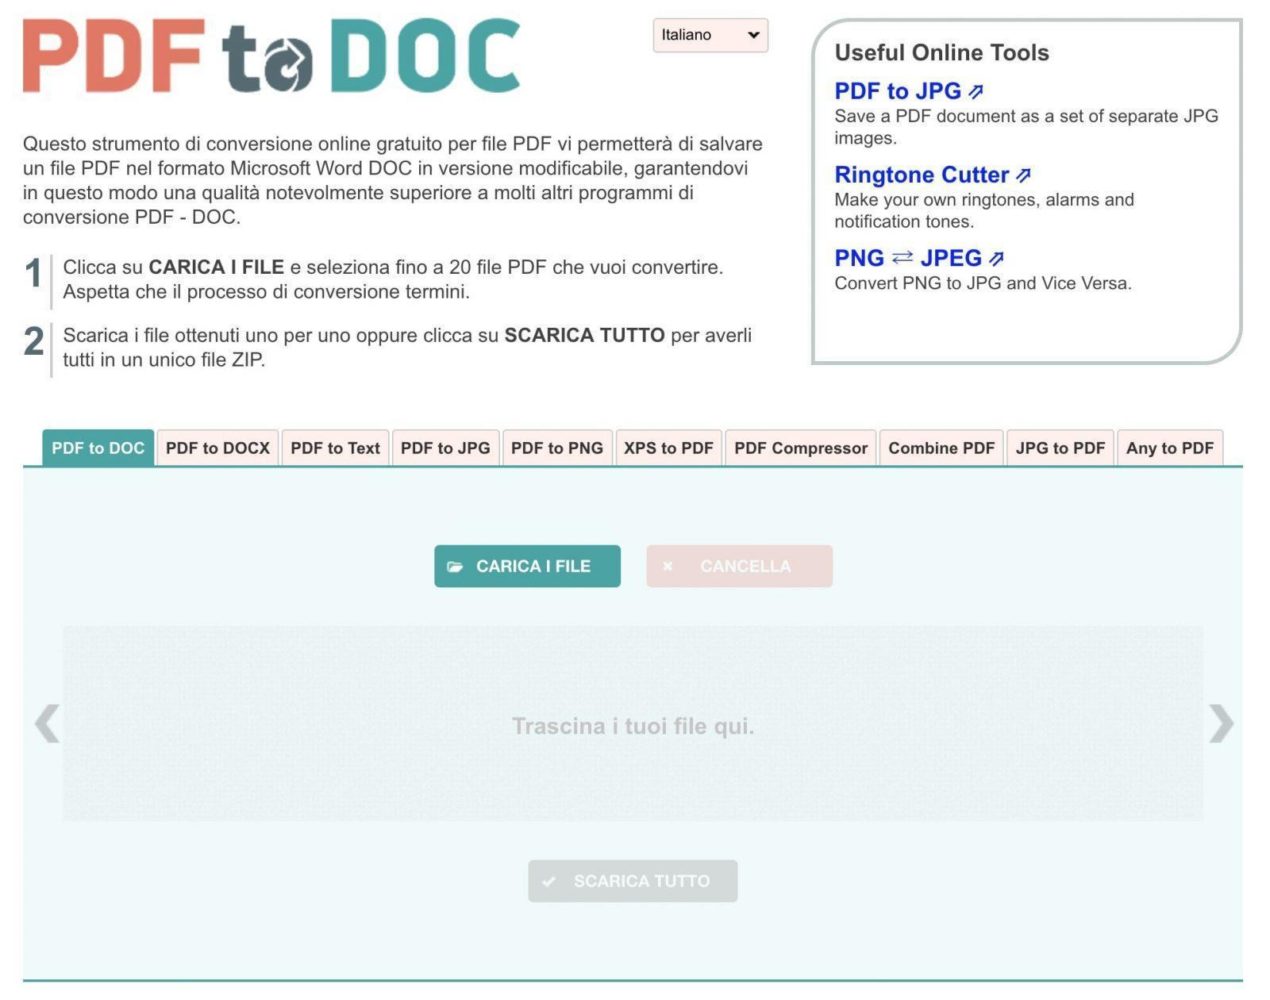 PDFtoDoc conversione online